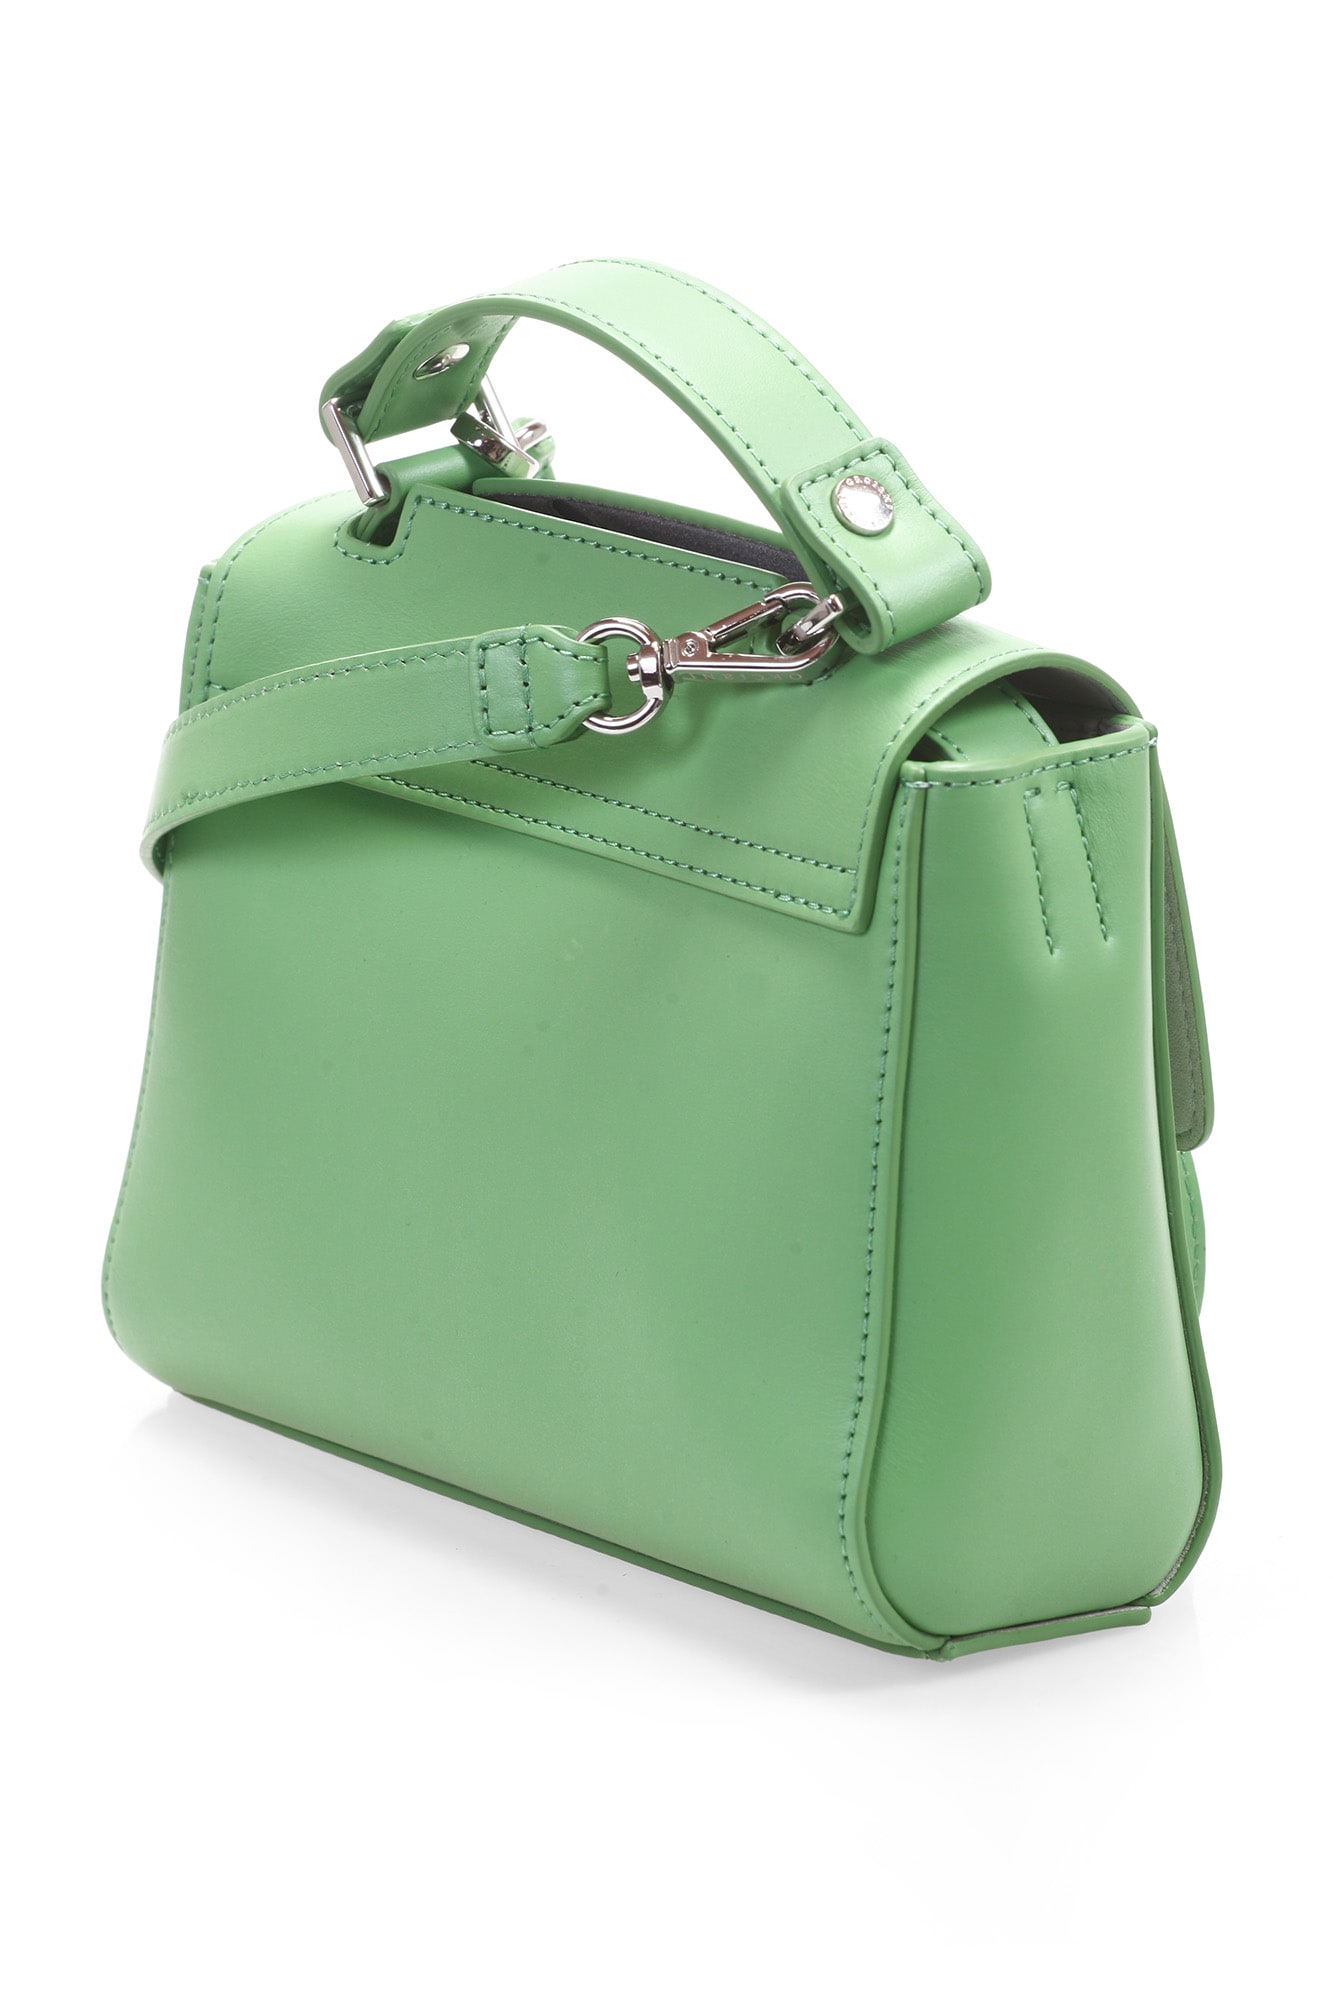 Shop Orciani Bags.. Mint Green